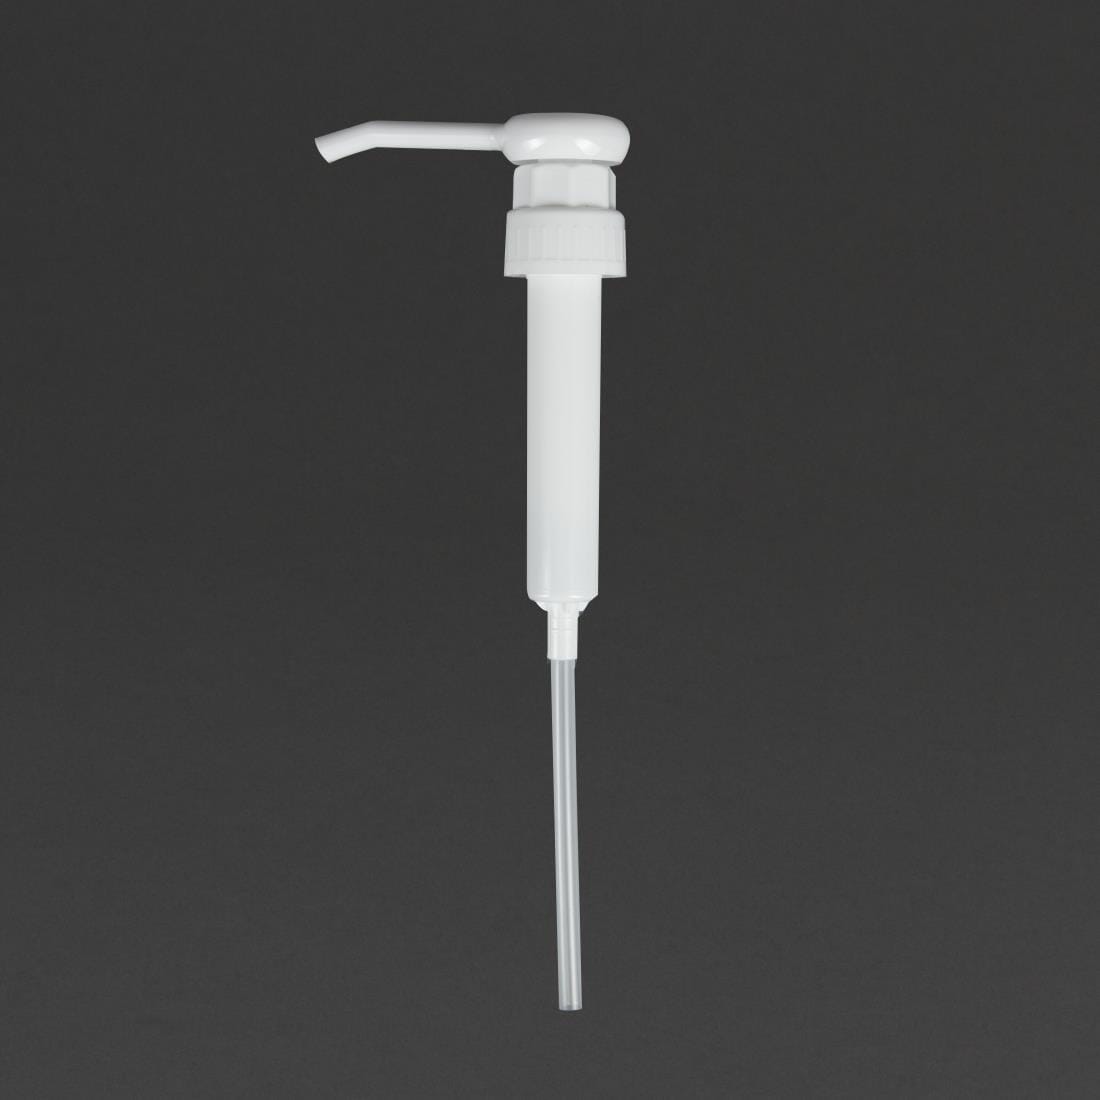 Jantex Pelican Pump Dispenser Plastic White 